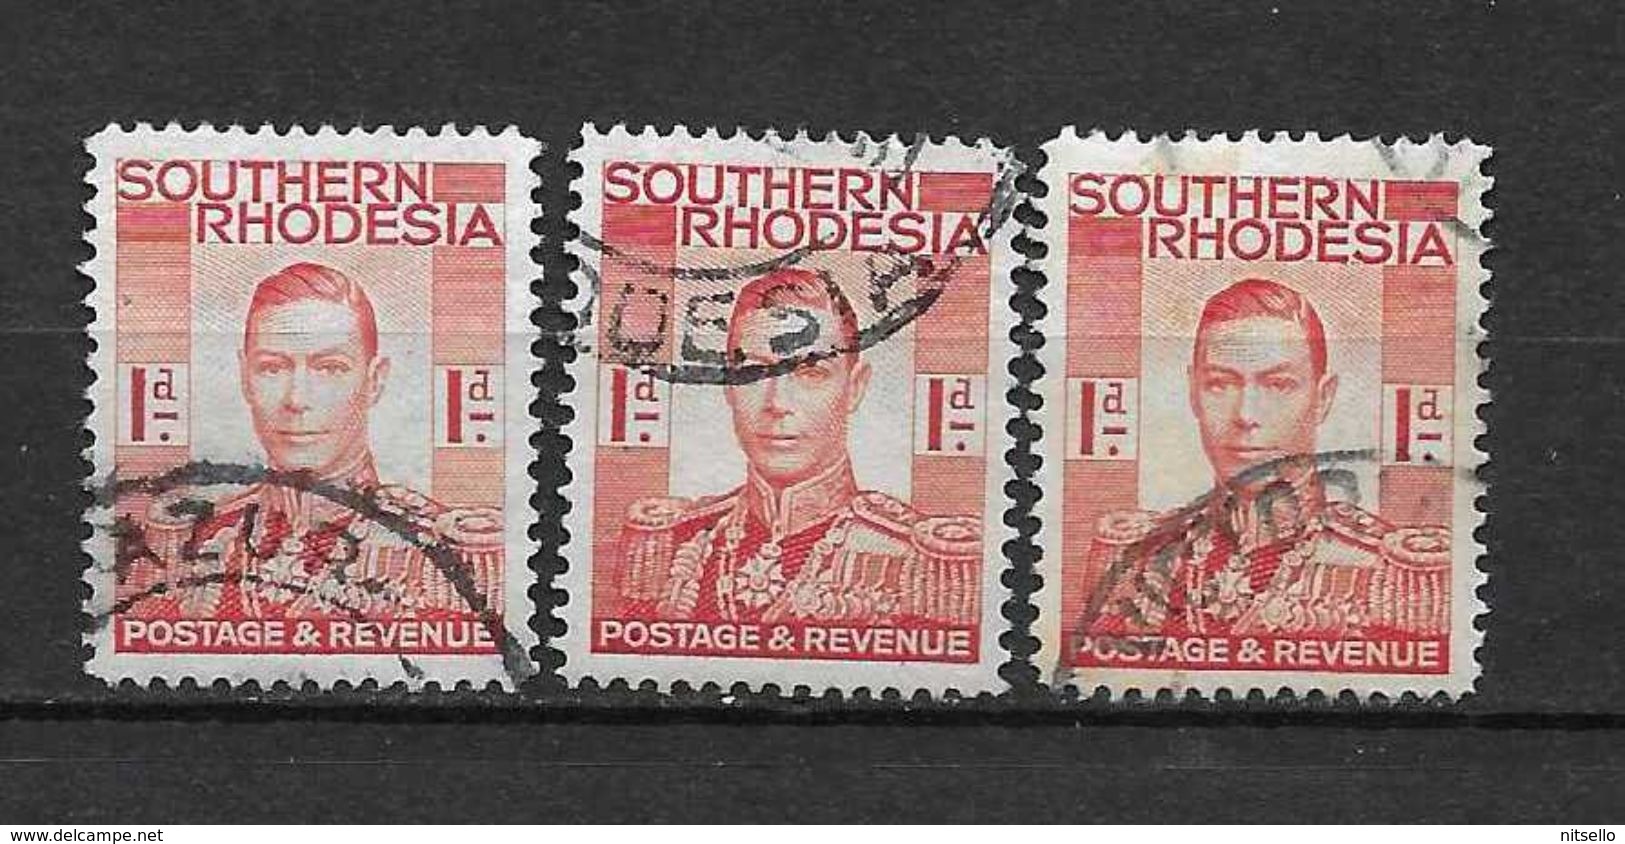 LOTE 2219A   ///   (C002) SOUTHERN RHODESIA  1937       ¡¡¡¡¡ LIQUIDATION !!!!!!! - Rhodesia Del Sud (...-1964)